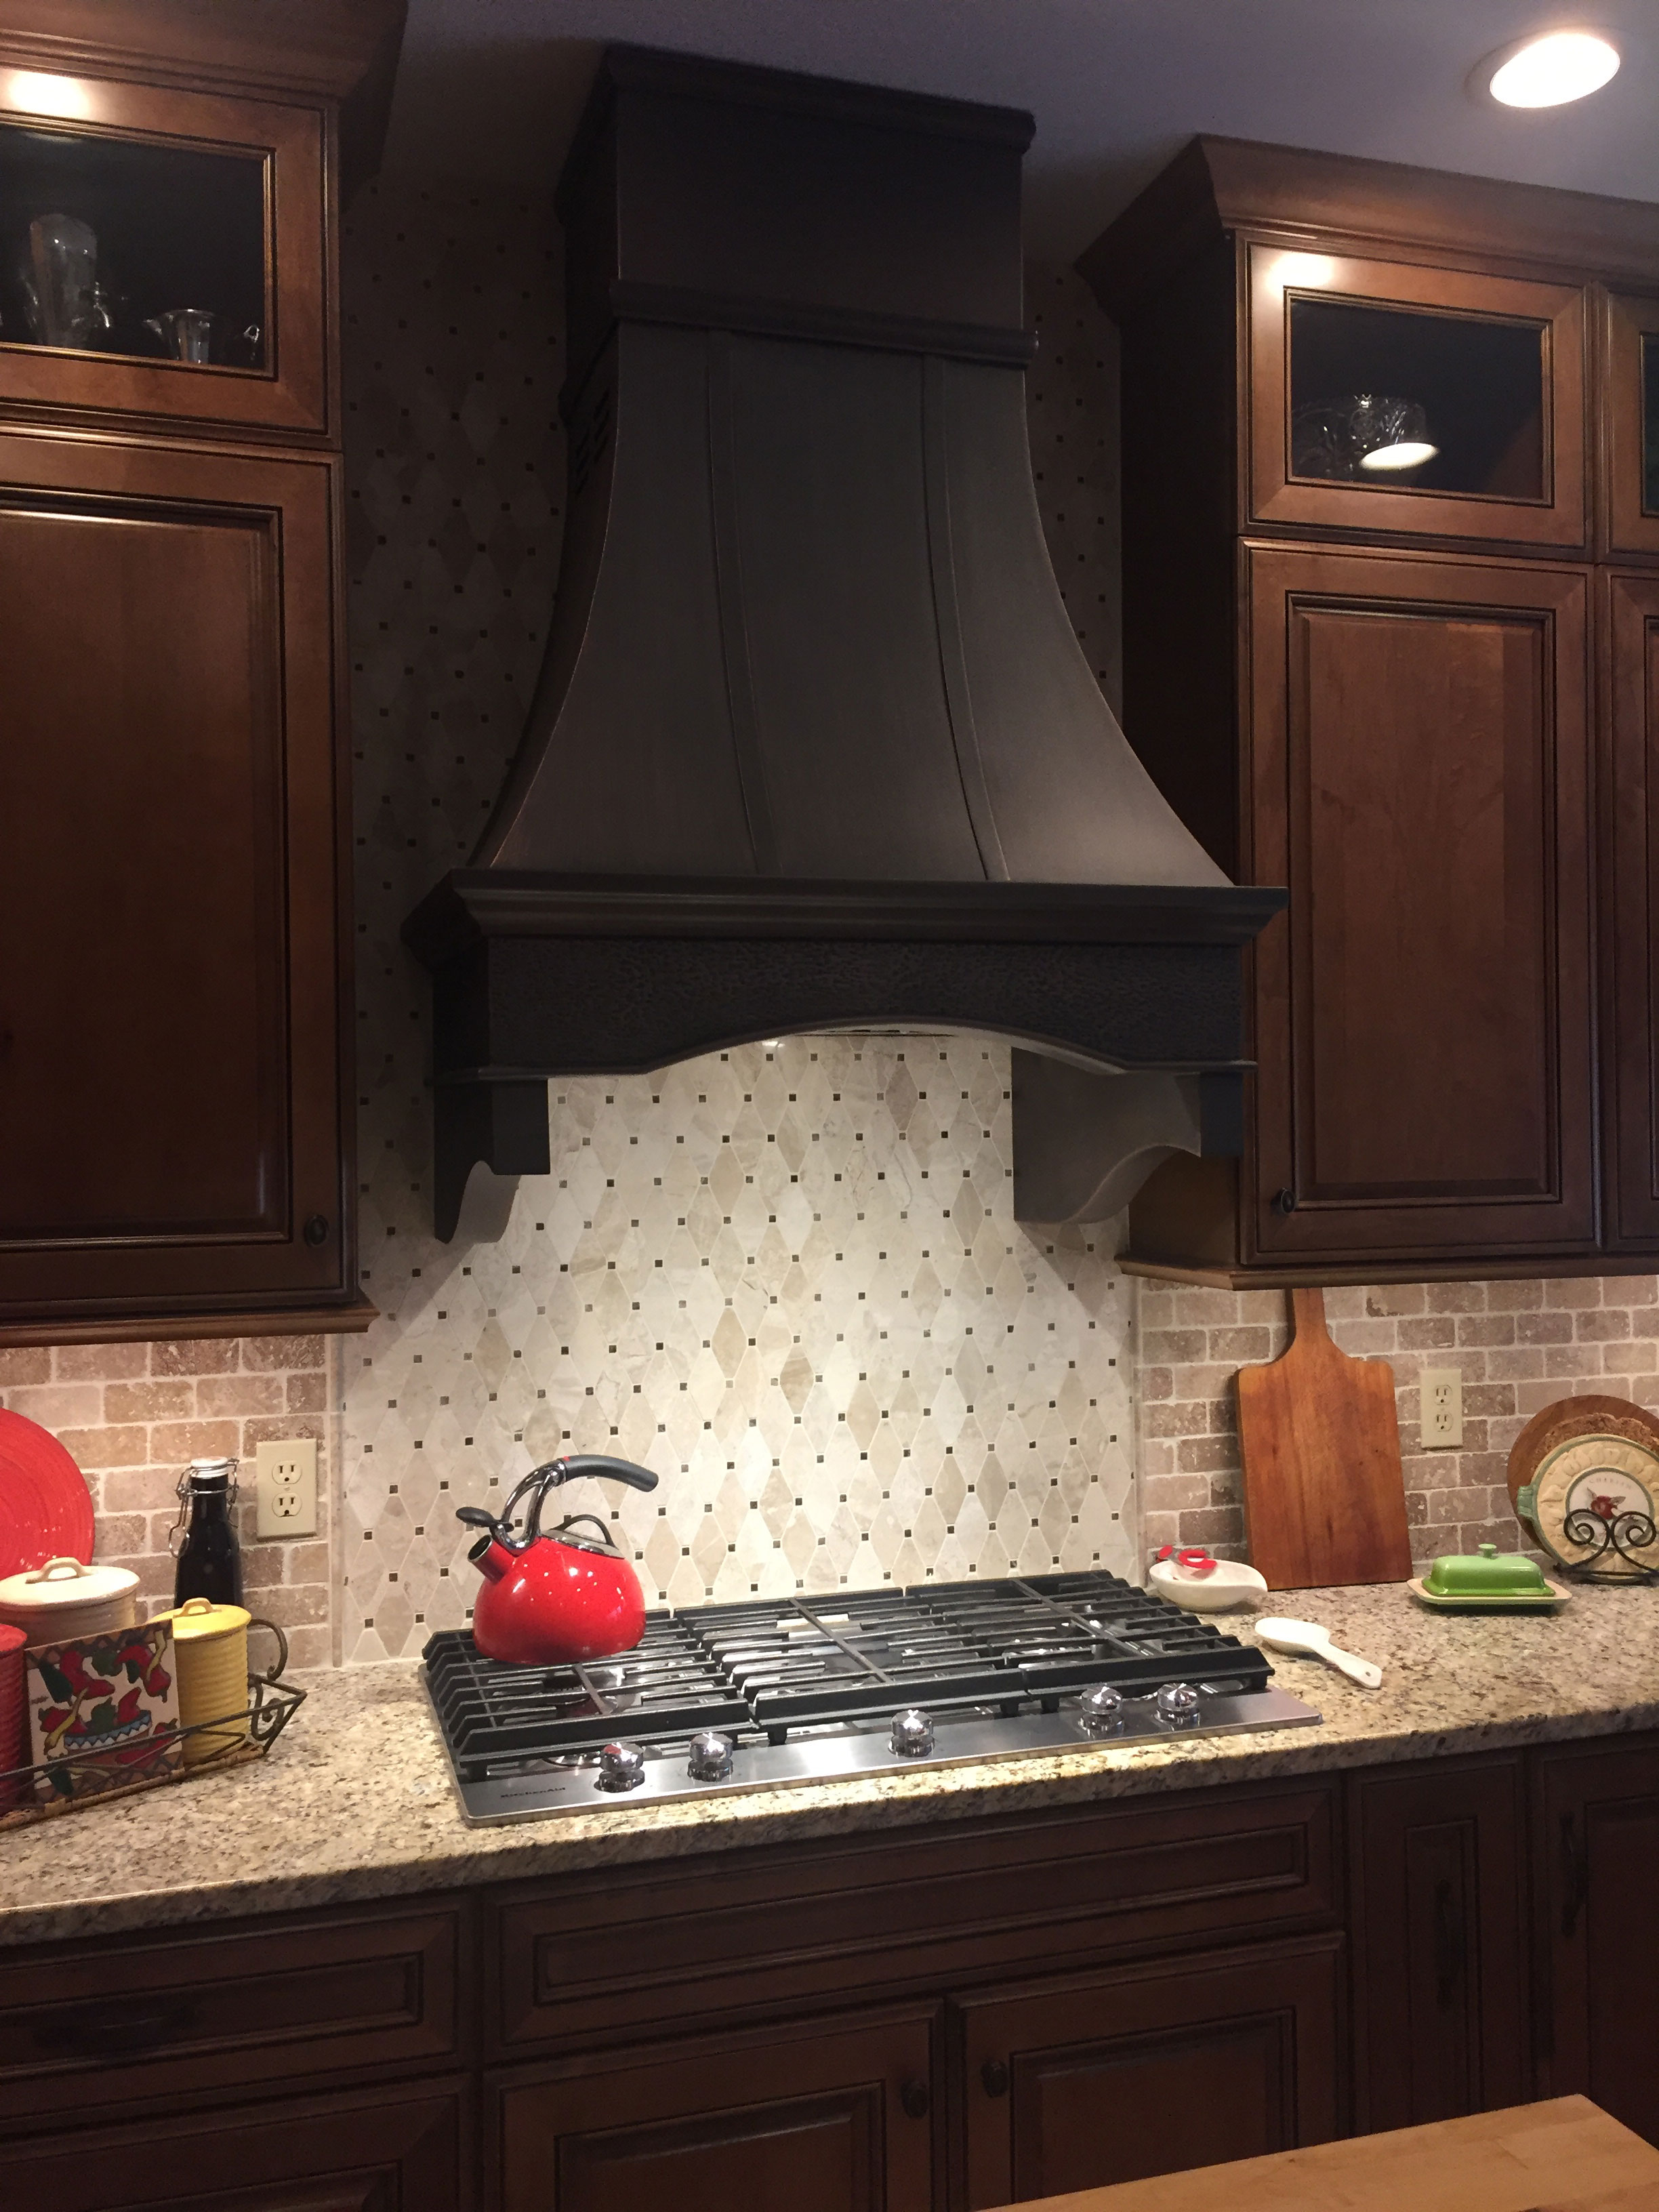 Black range hood in kitchen with tile backsplash World CopperSmith